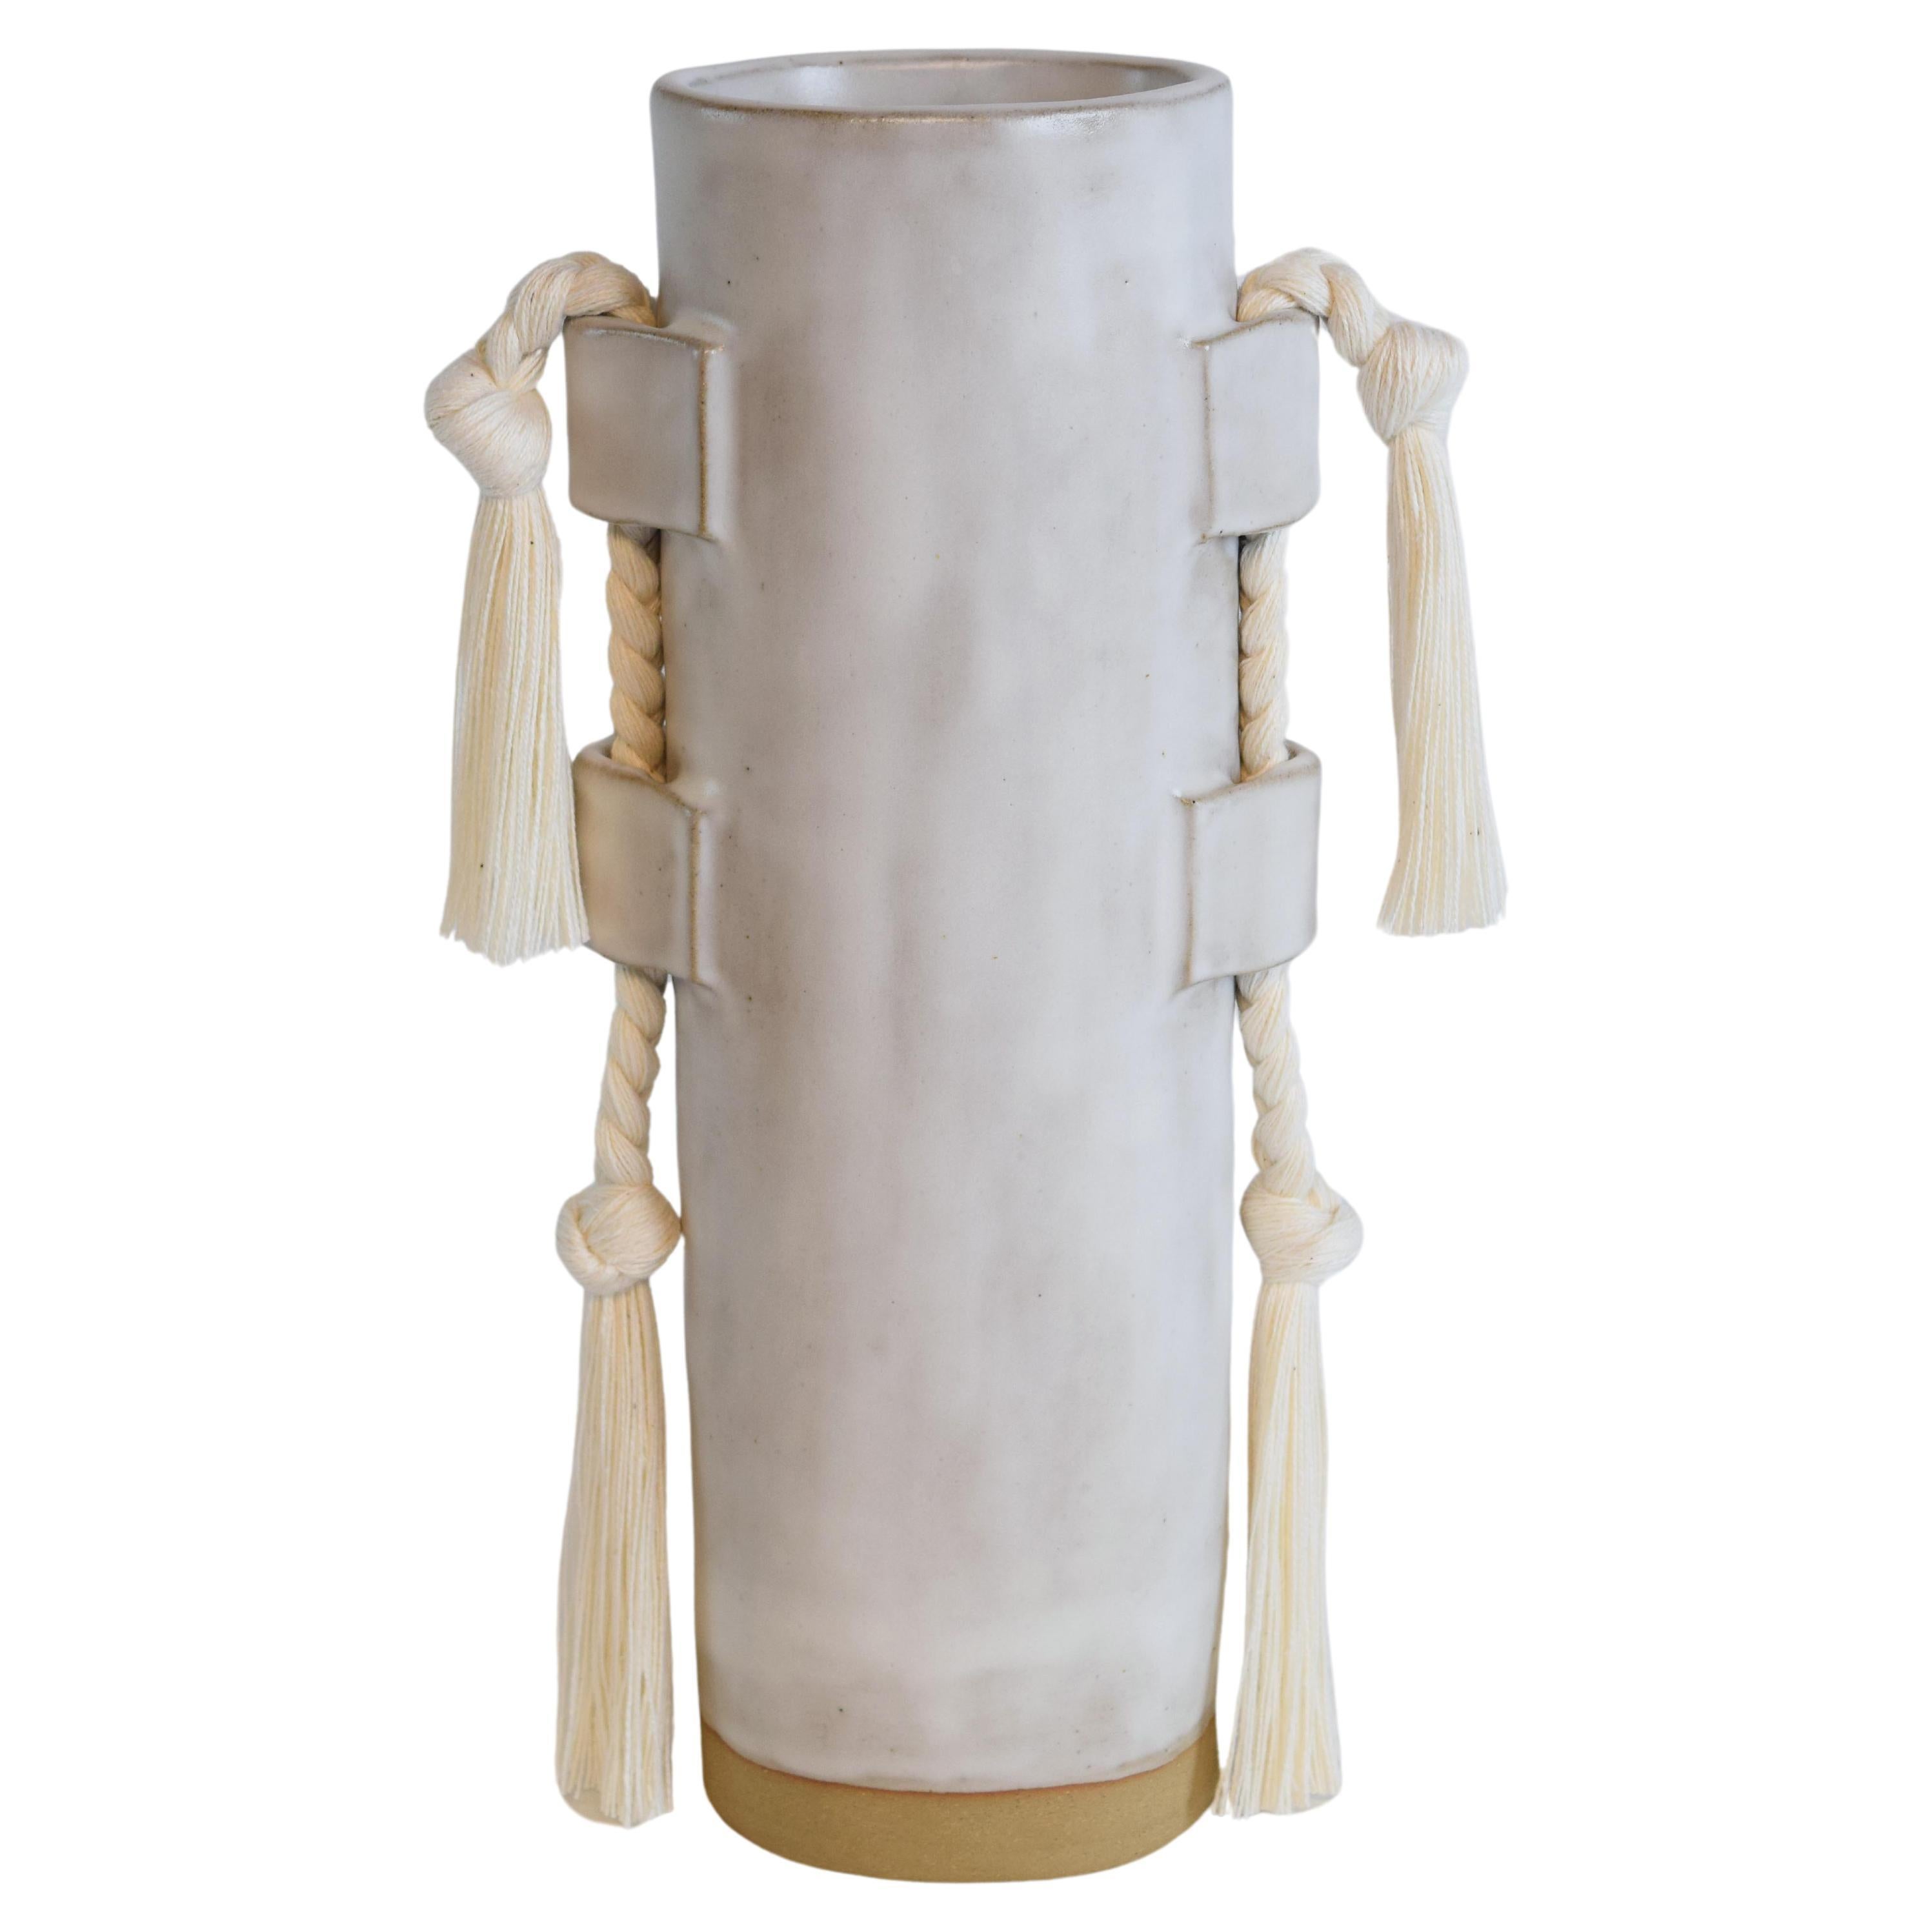 Handmade Ceramic Vase #504 in Satin White with White Cotton Braid and Fringe